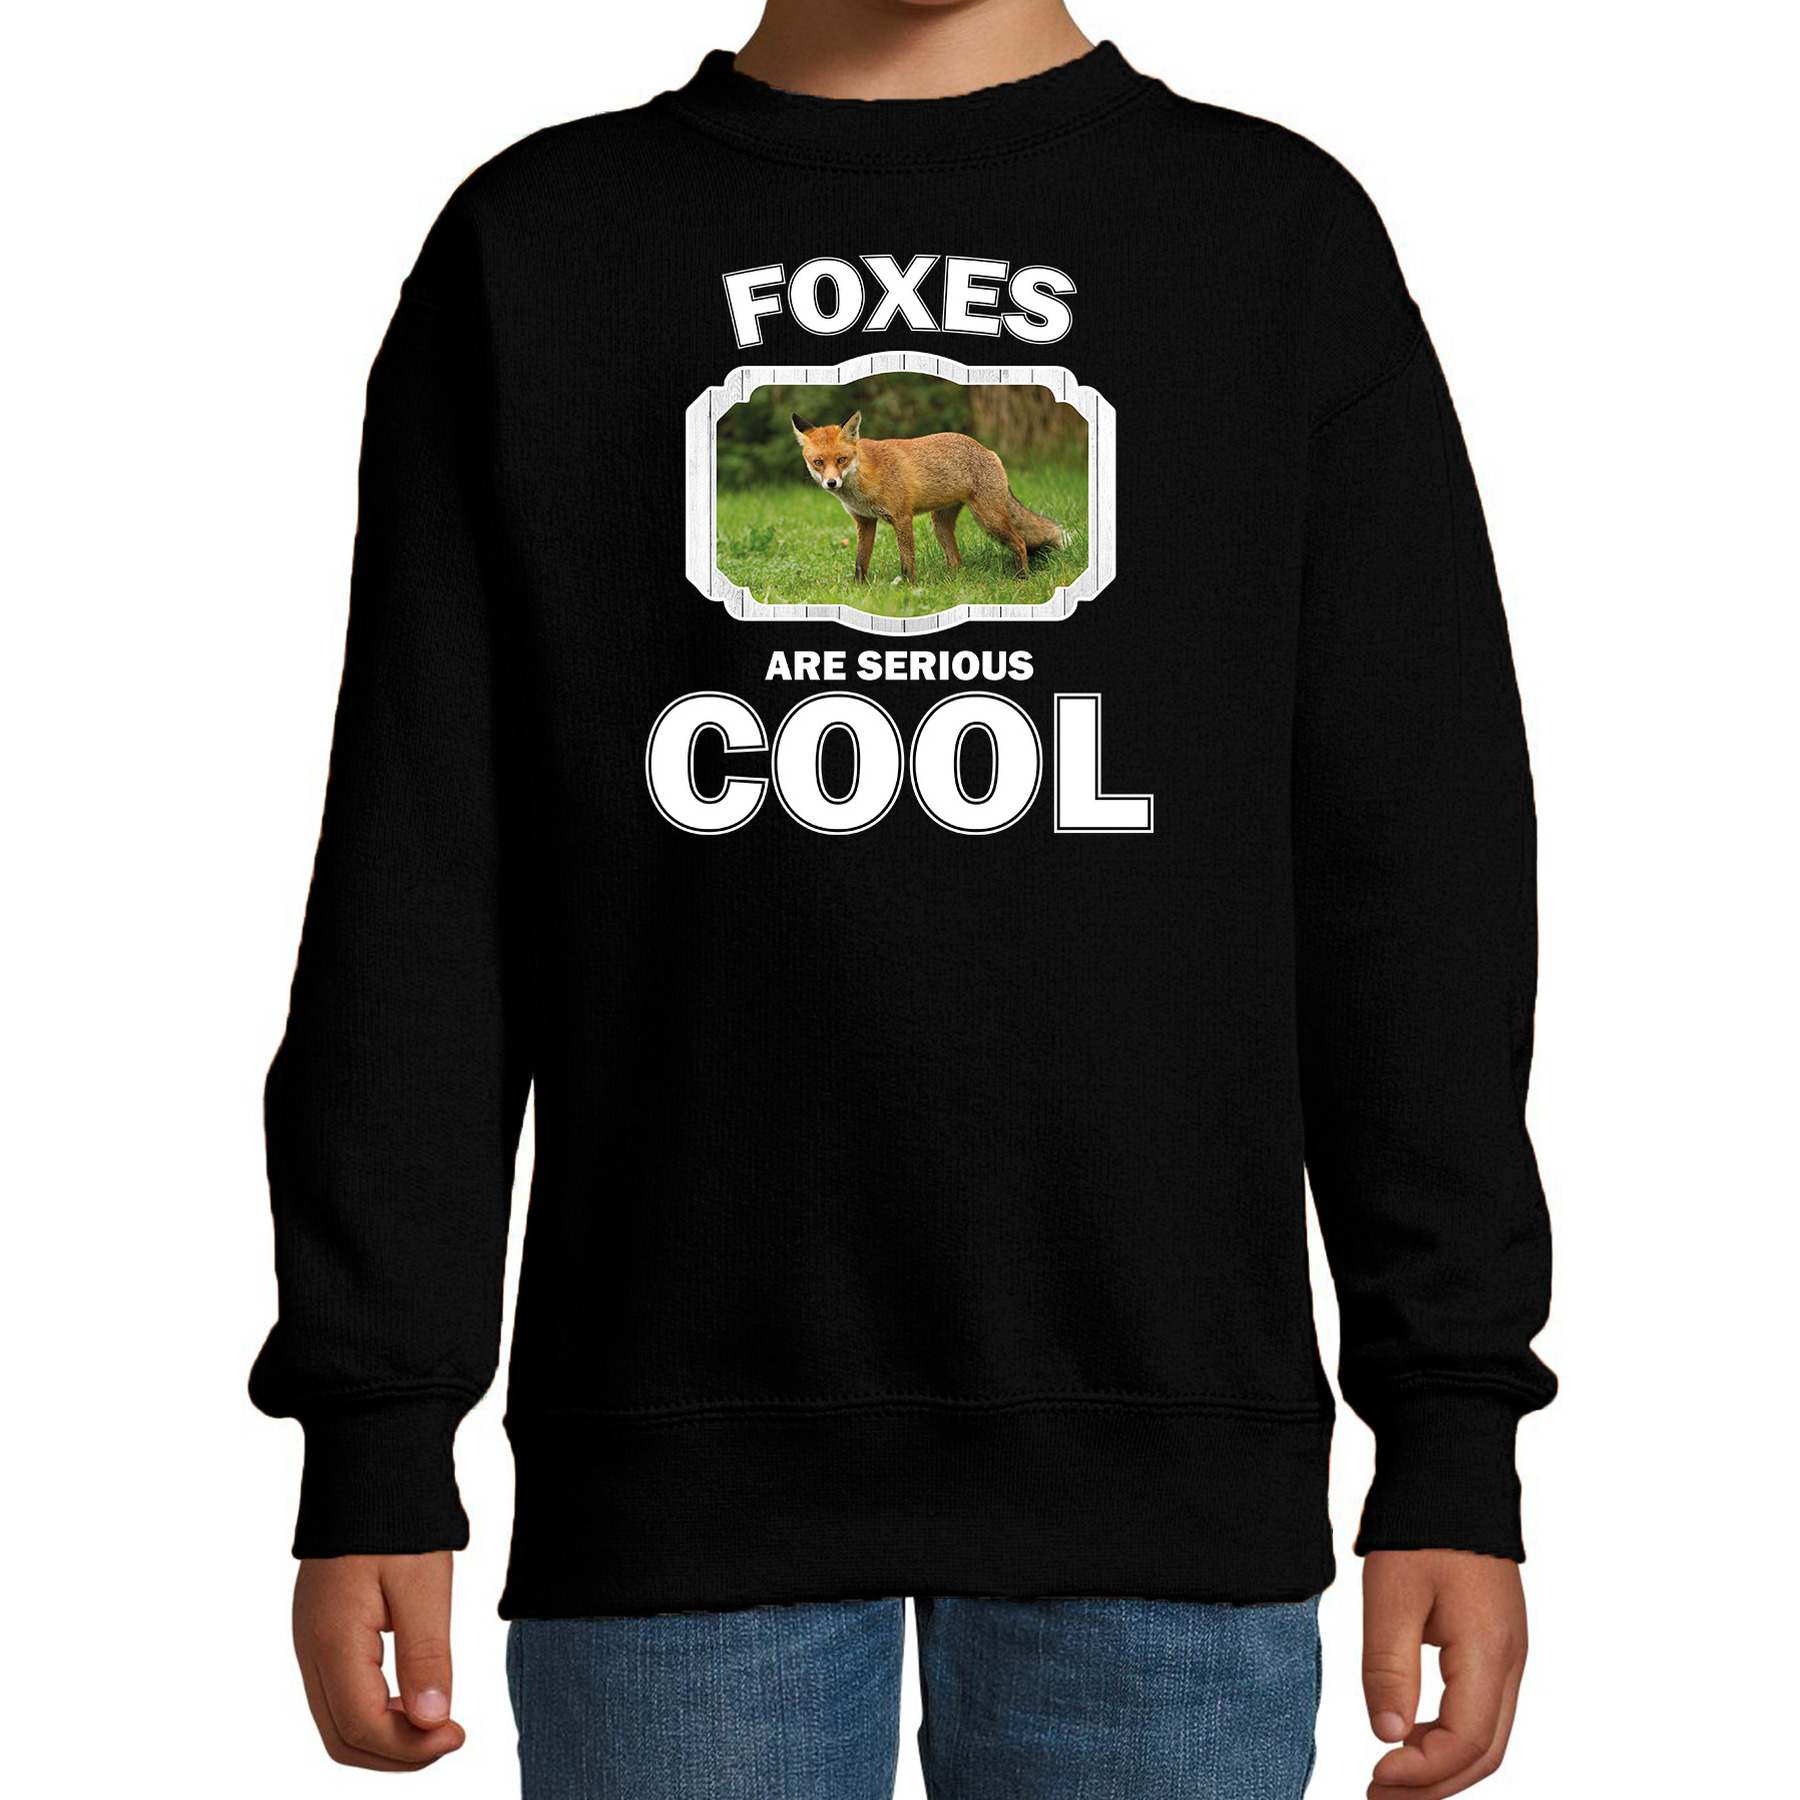 Sweater foxes are serious cool zwart kinderen - vossen/ bruine vos trui